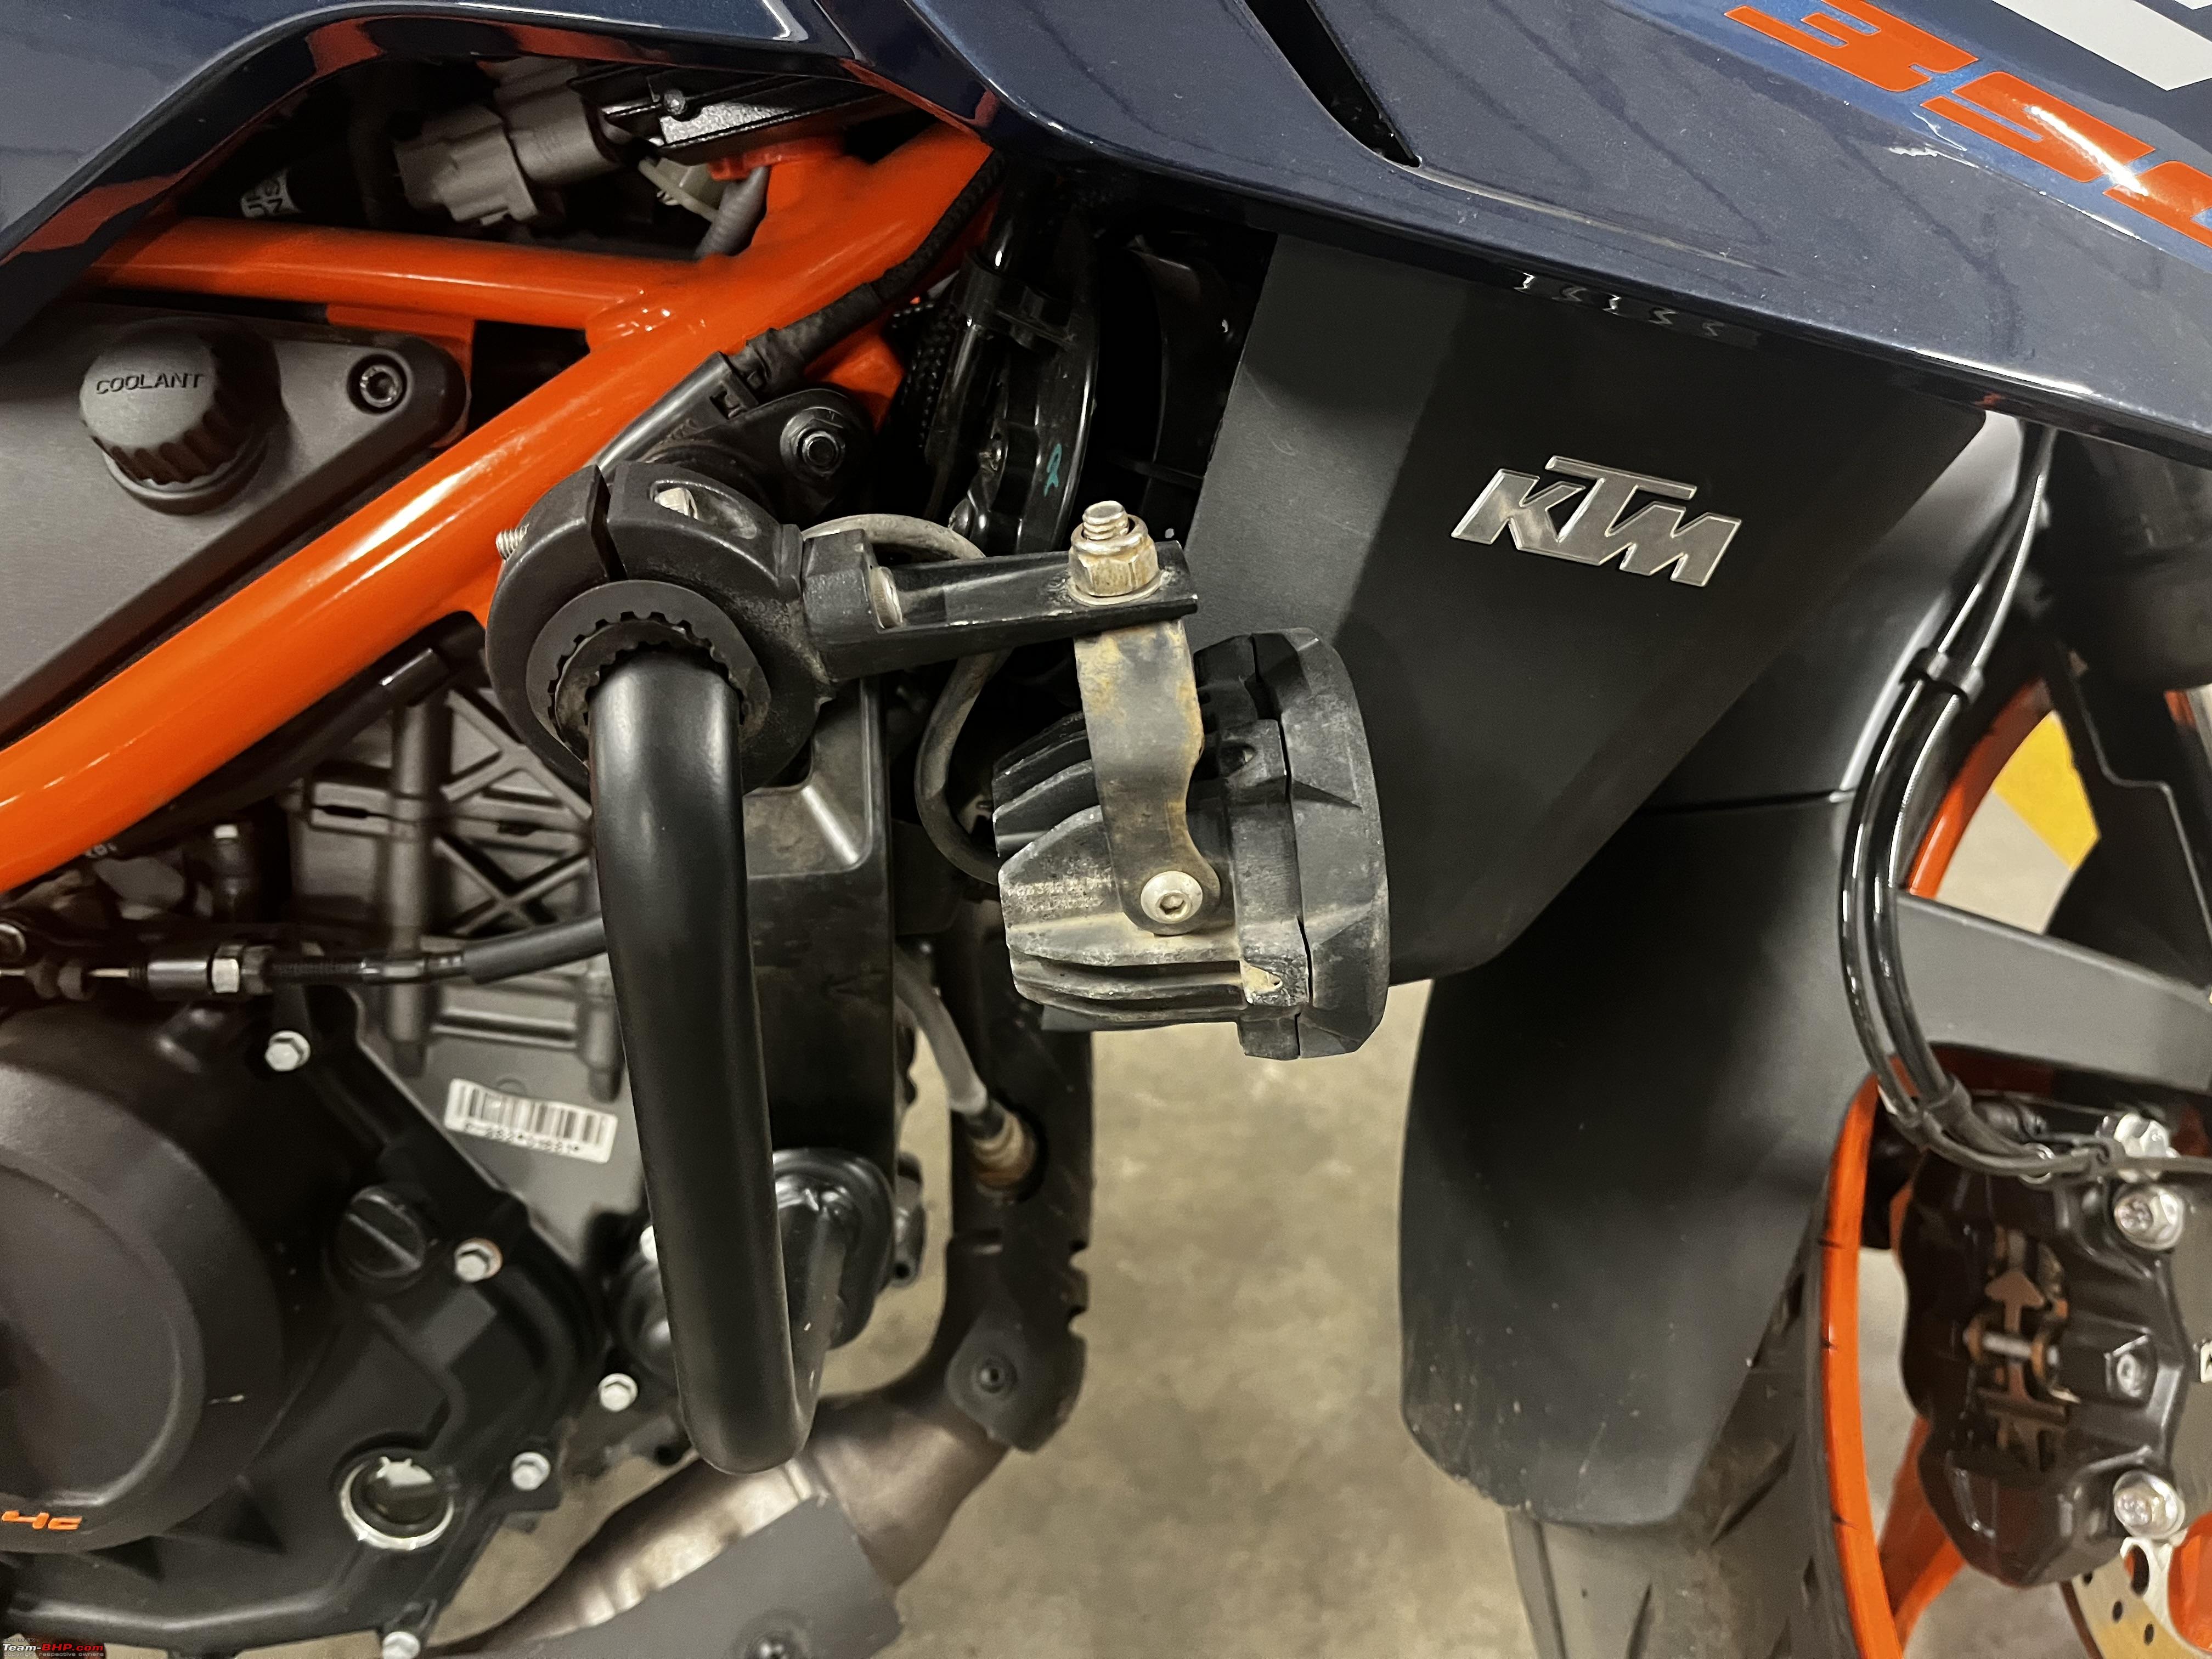 Review: My KTM Duke 125 - Team-BHP